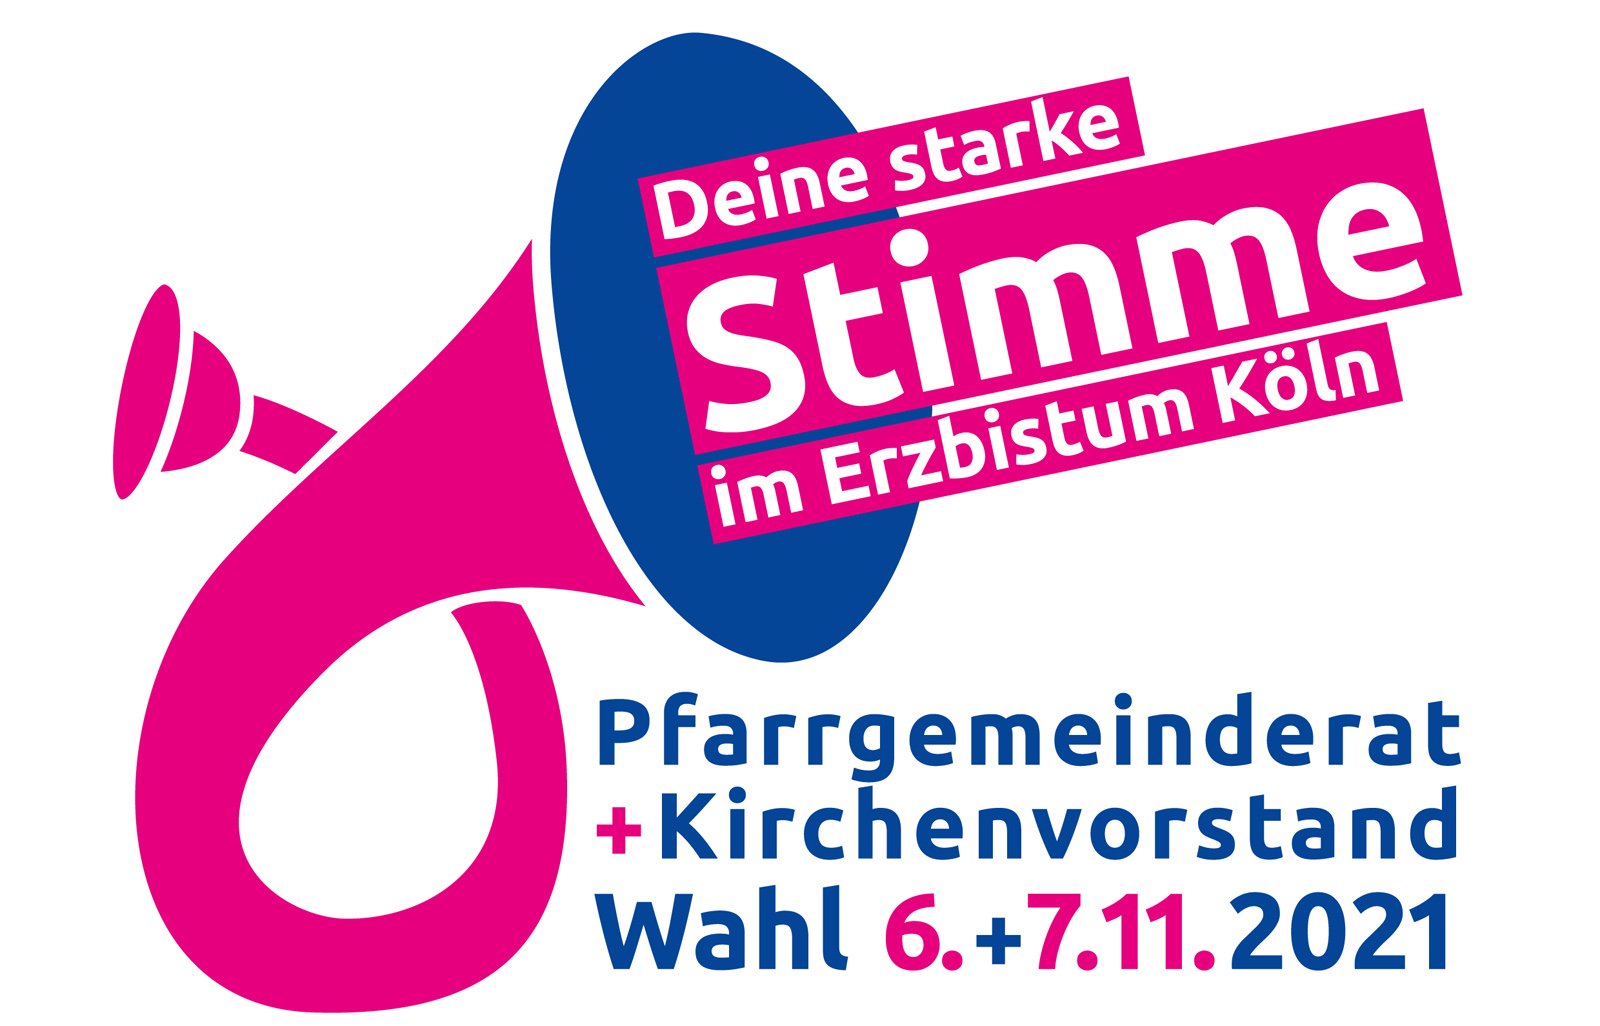 pgr-kampagne-ebk-2021-logotype2